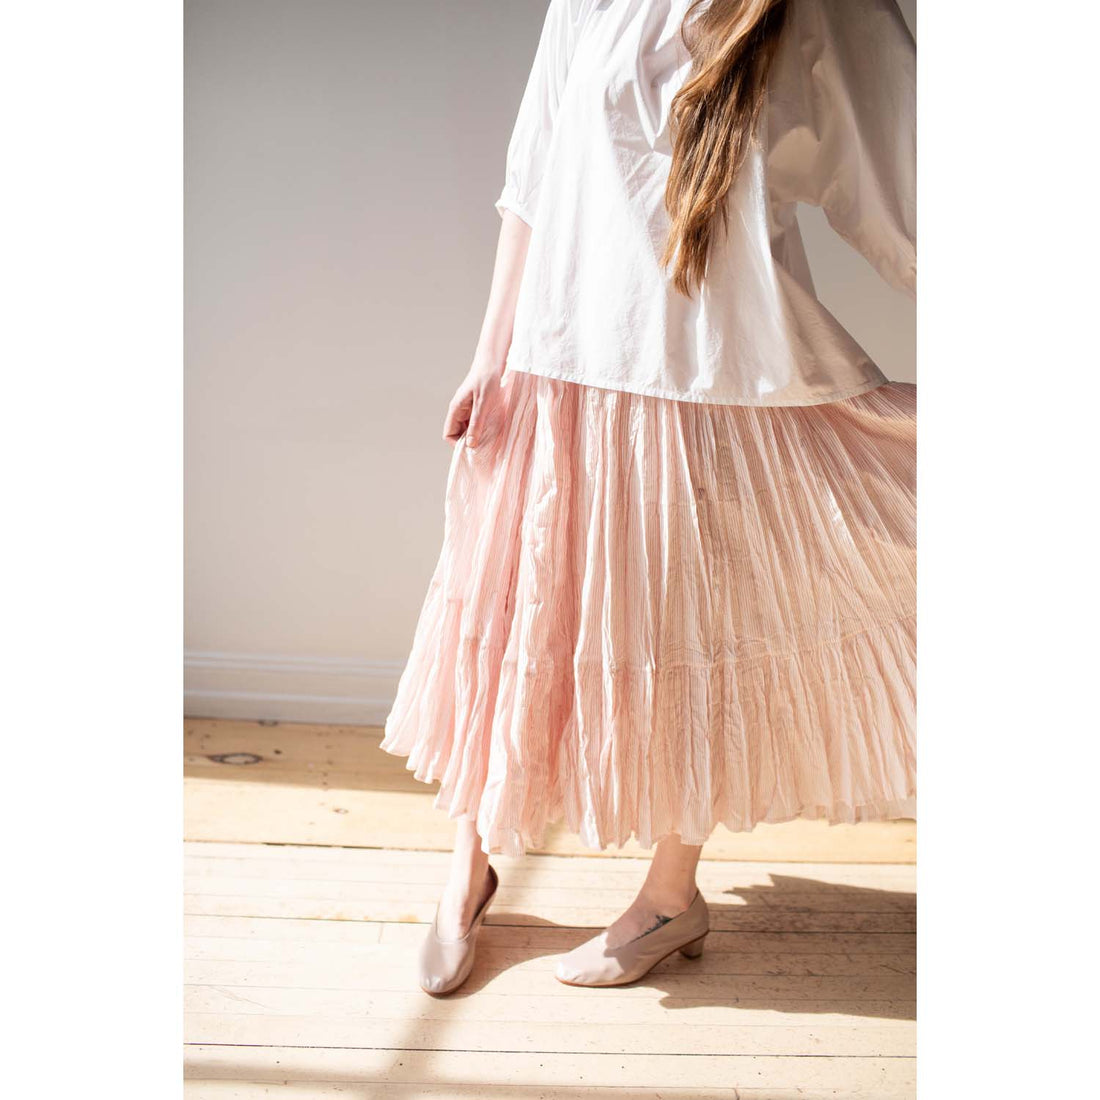 Anaak Caen Stripe Pleated Skirt in Candy Stripe